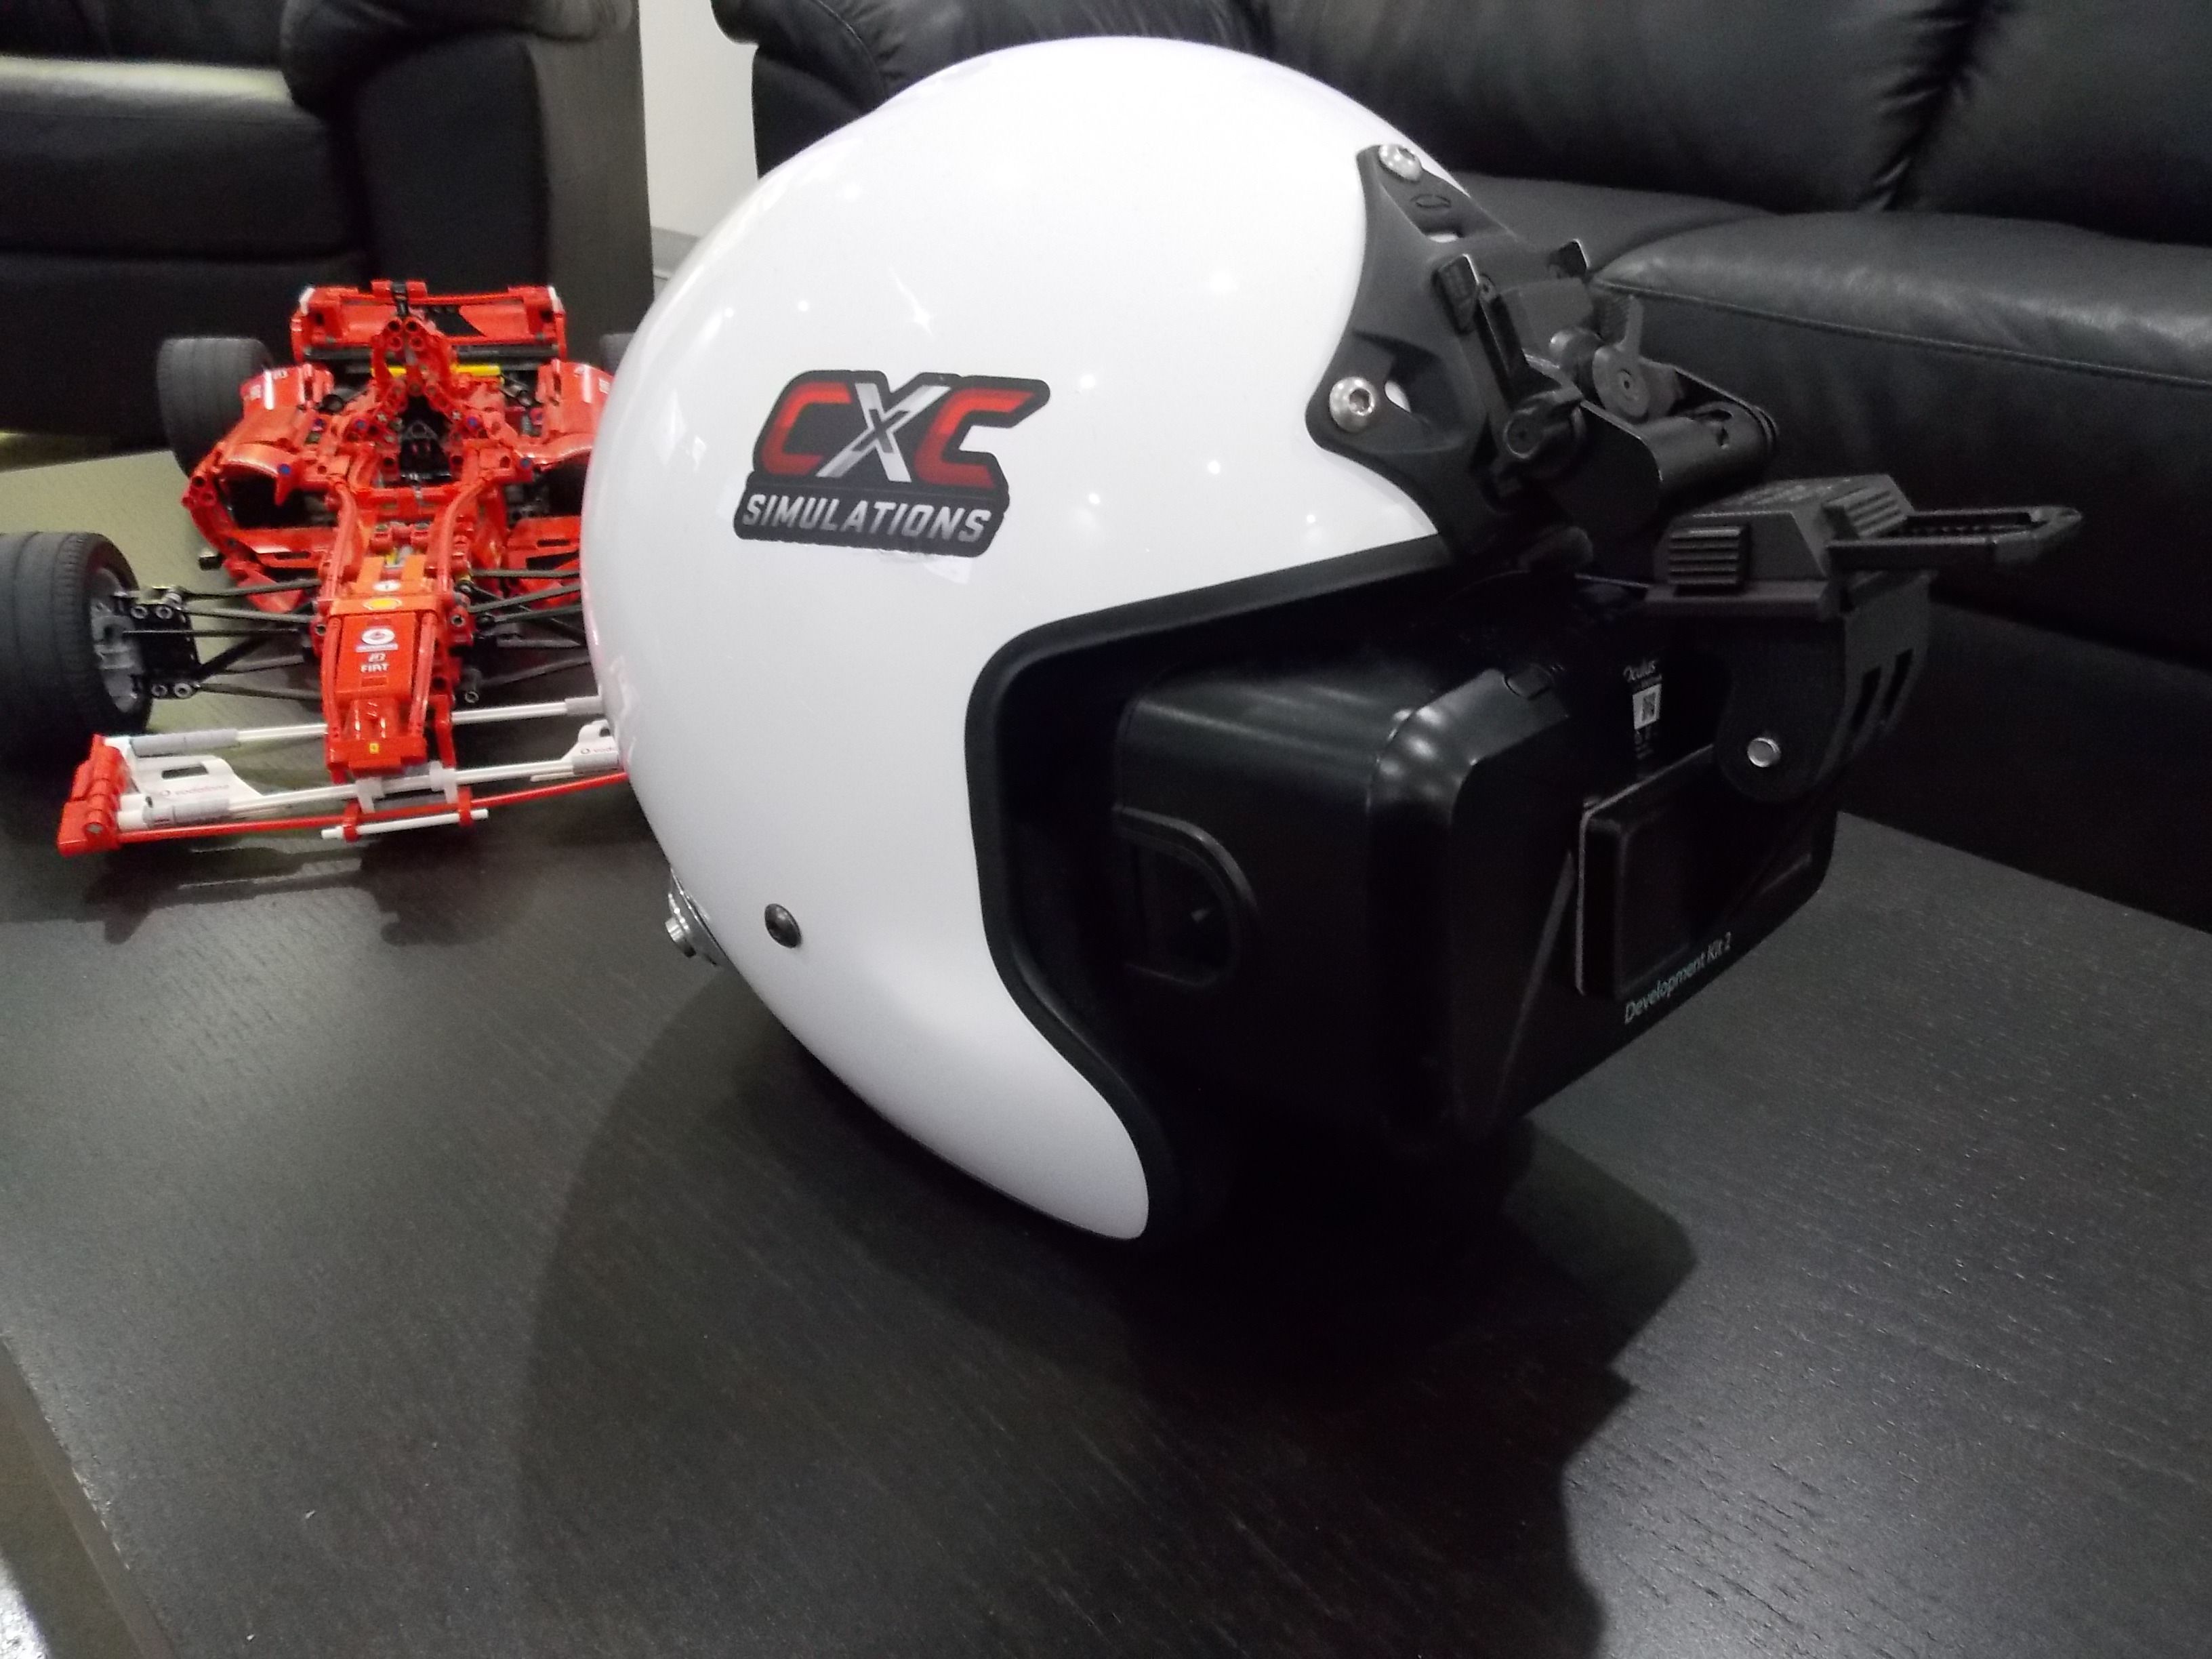 CXC Simulations_VR helmet testing